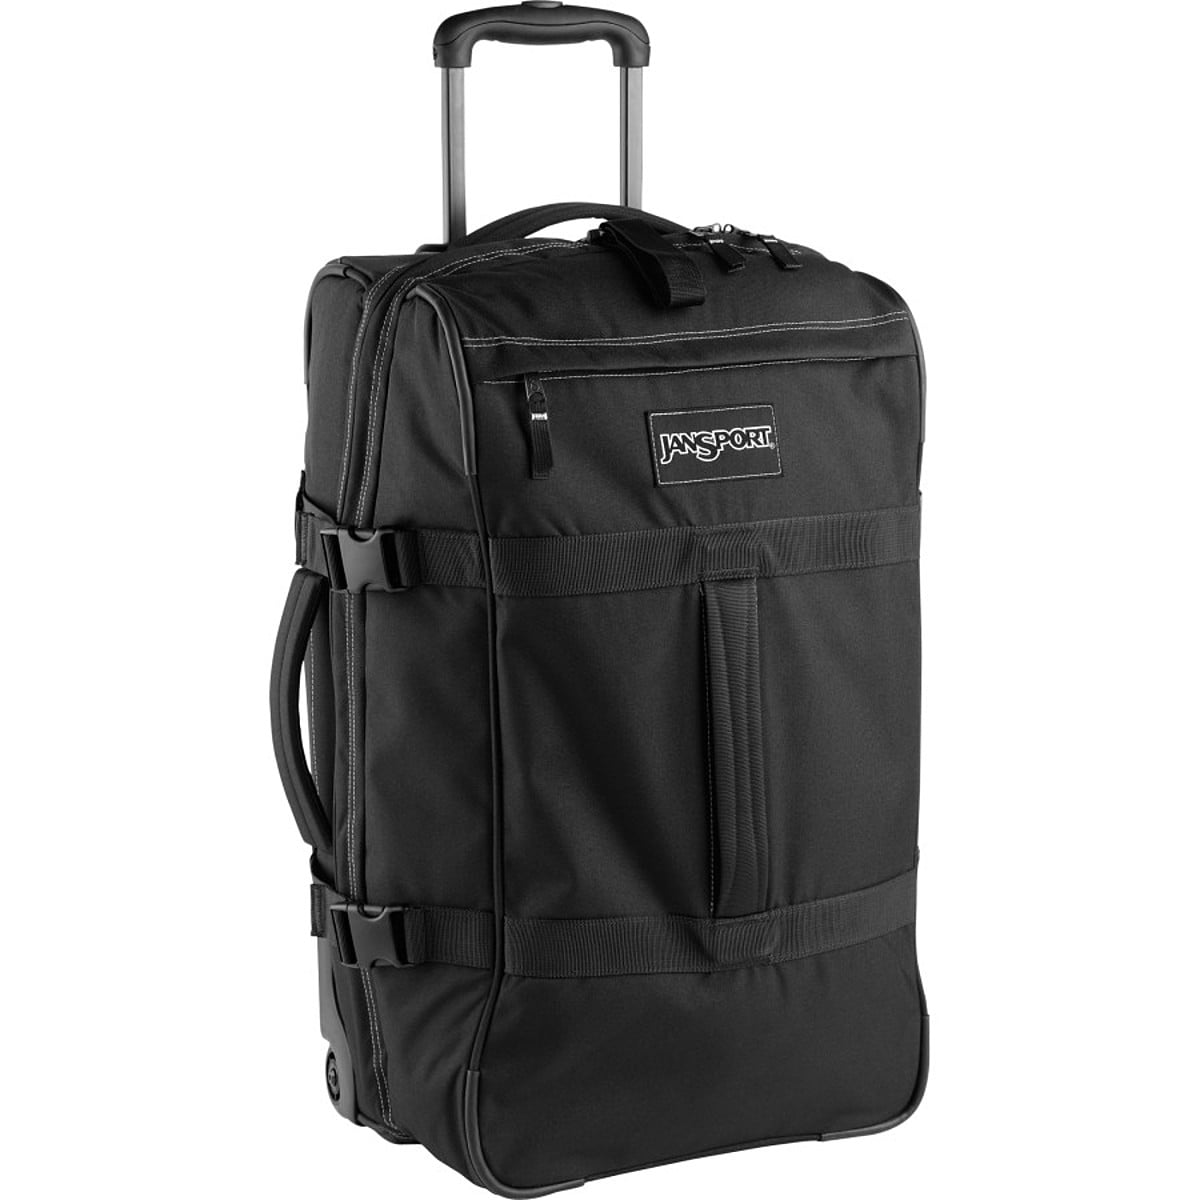 JanSport Footlocker 22 Rolling Bag - 3450cu in - Travel